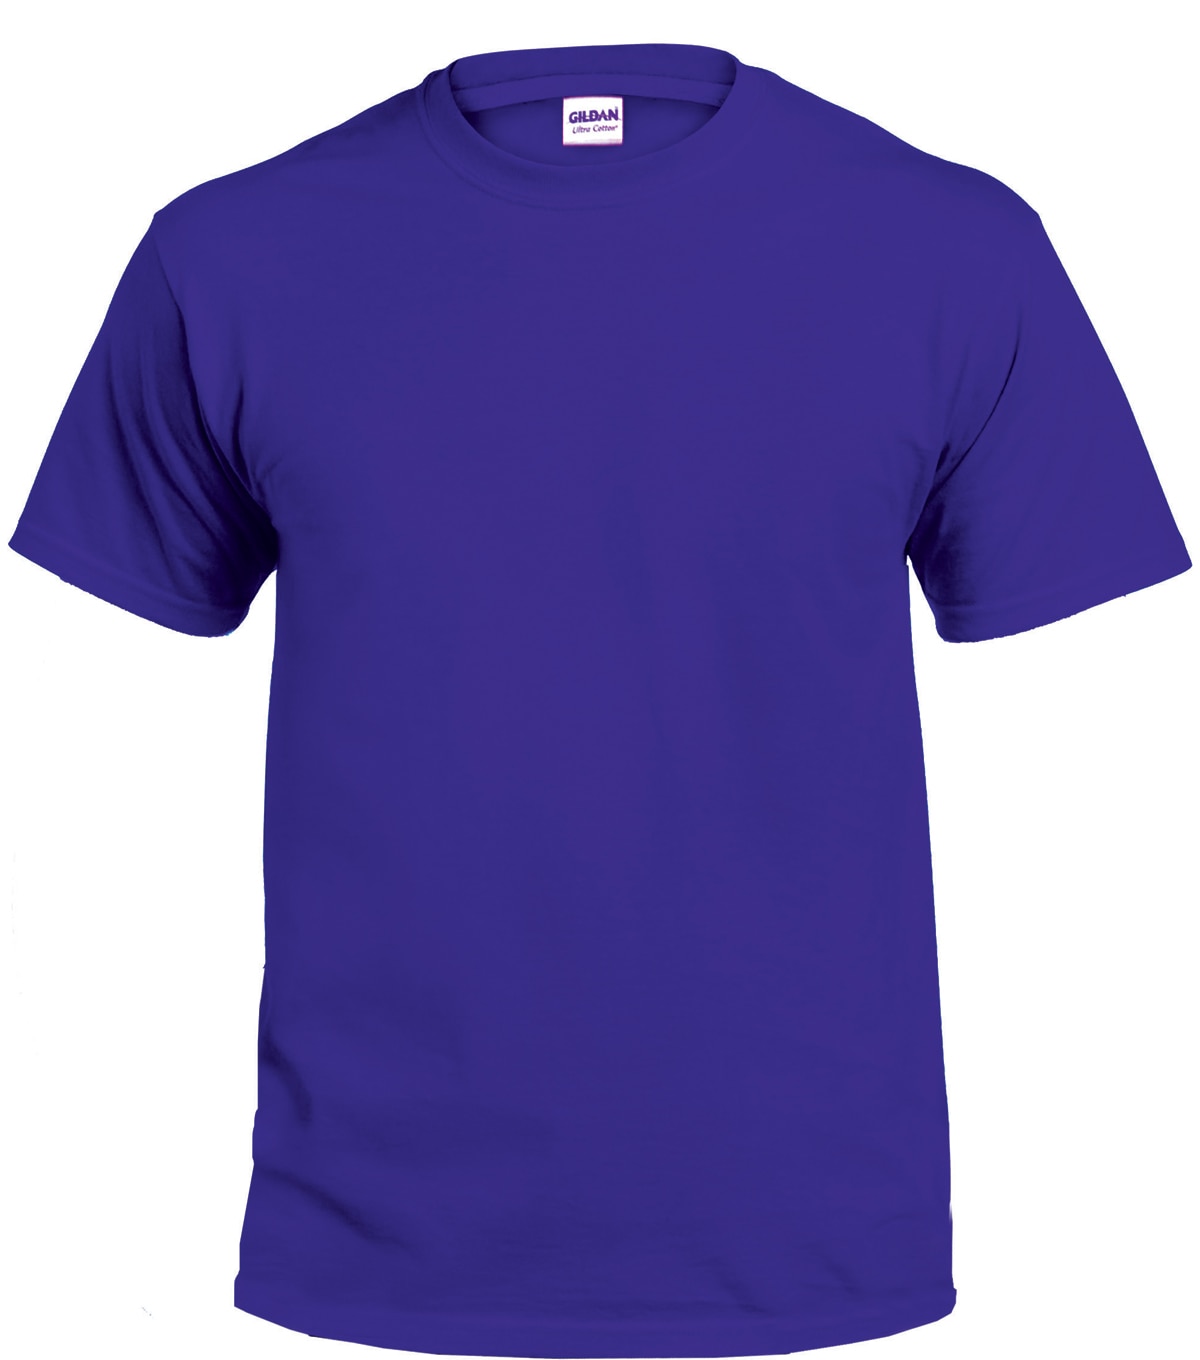 Download Gildan Adult T-shirt X-Large | JOANN